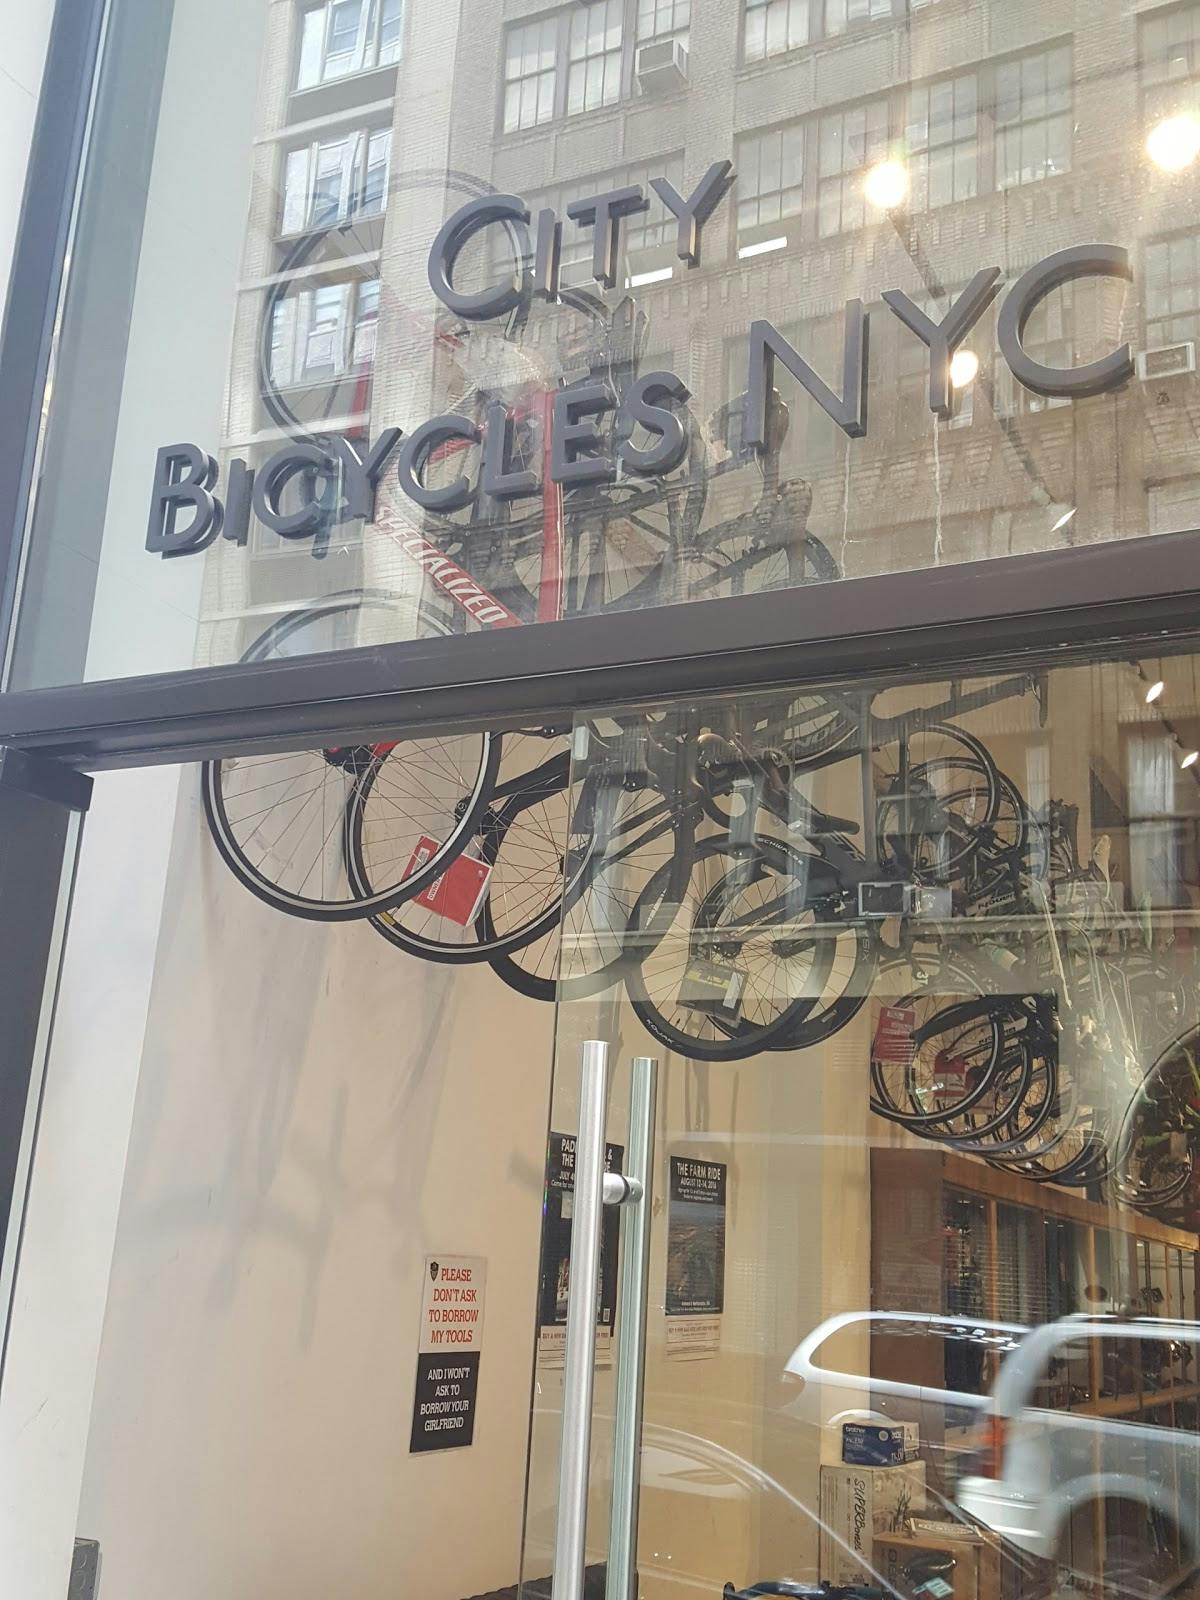 Image - City Bicycles NYC